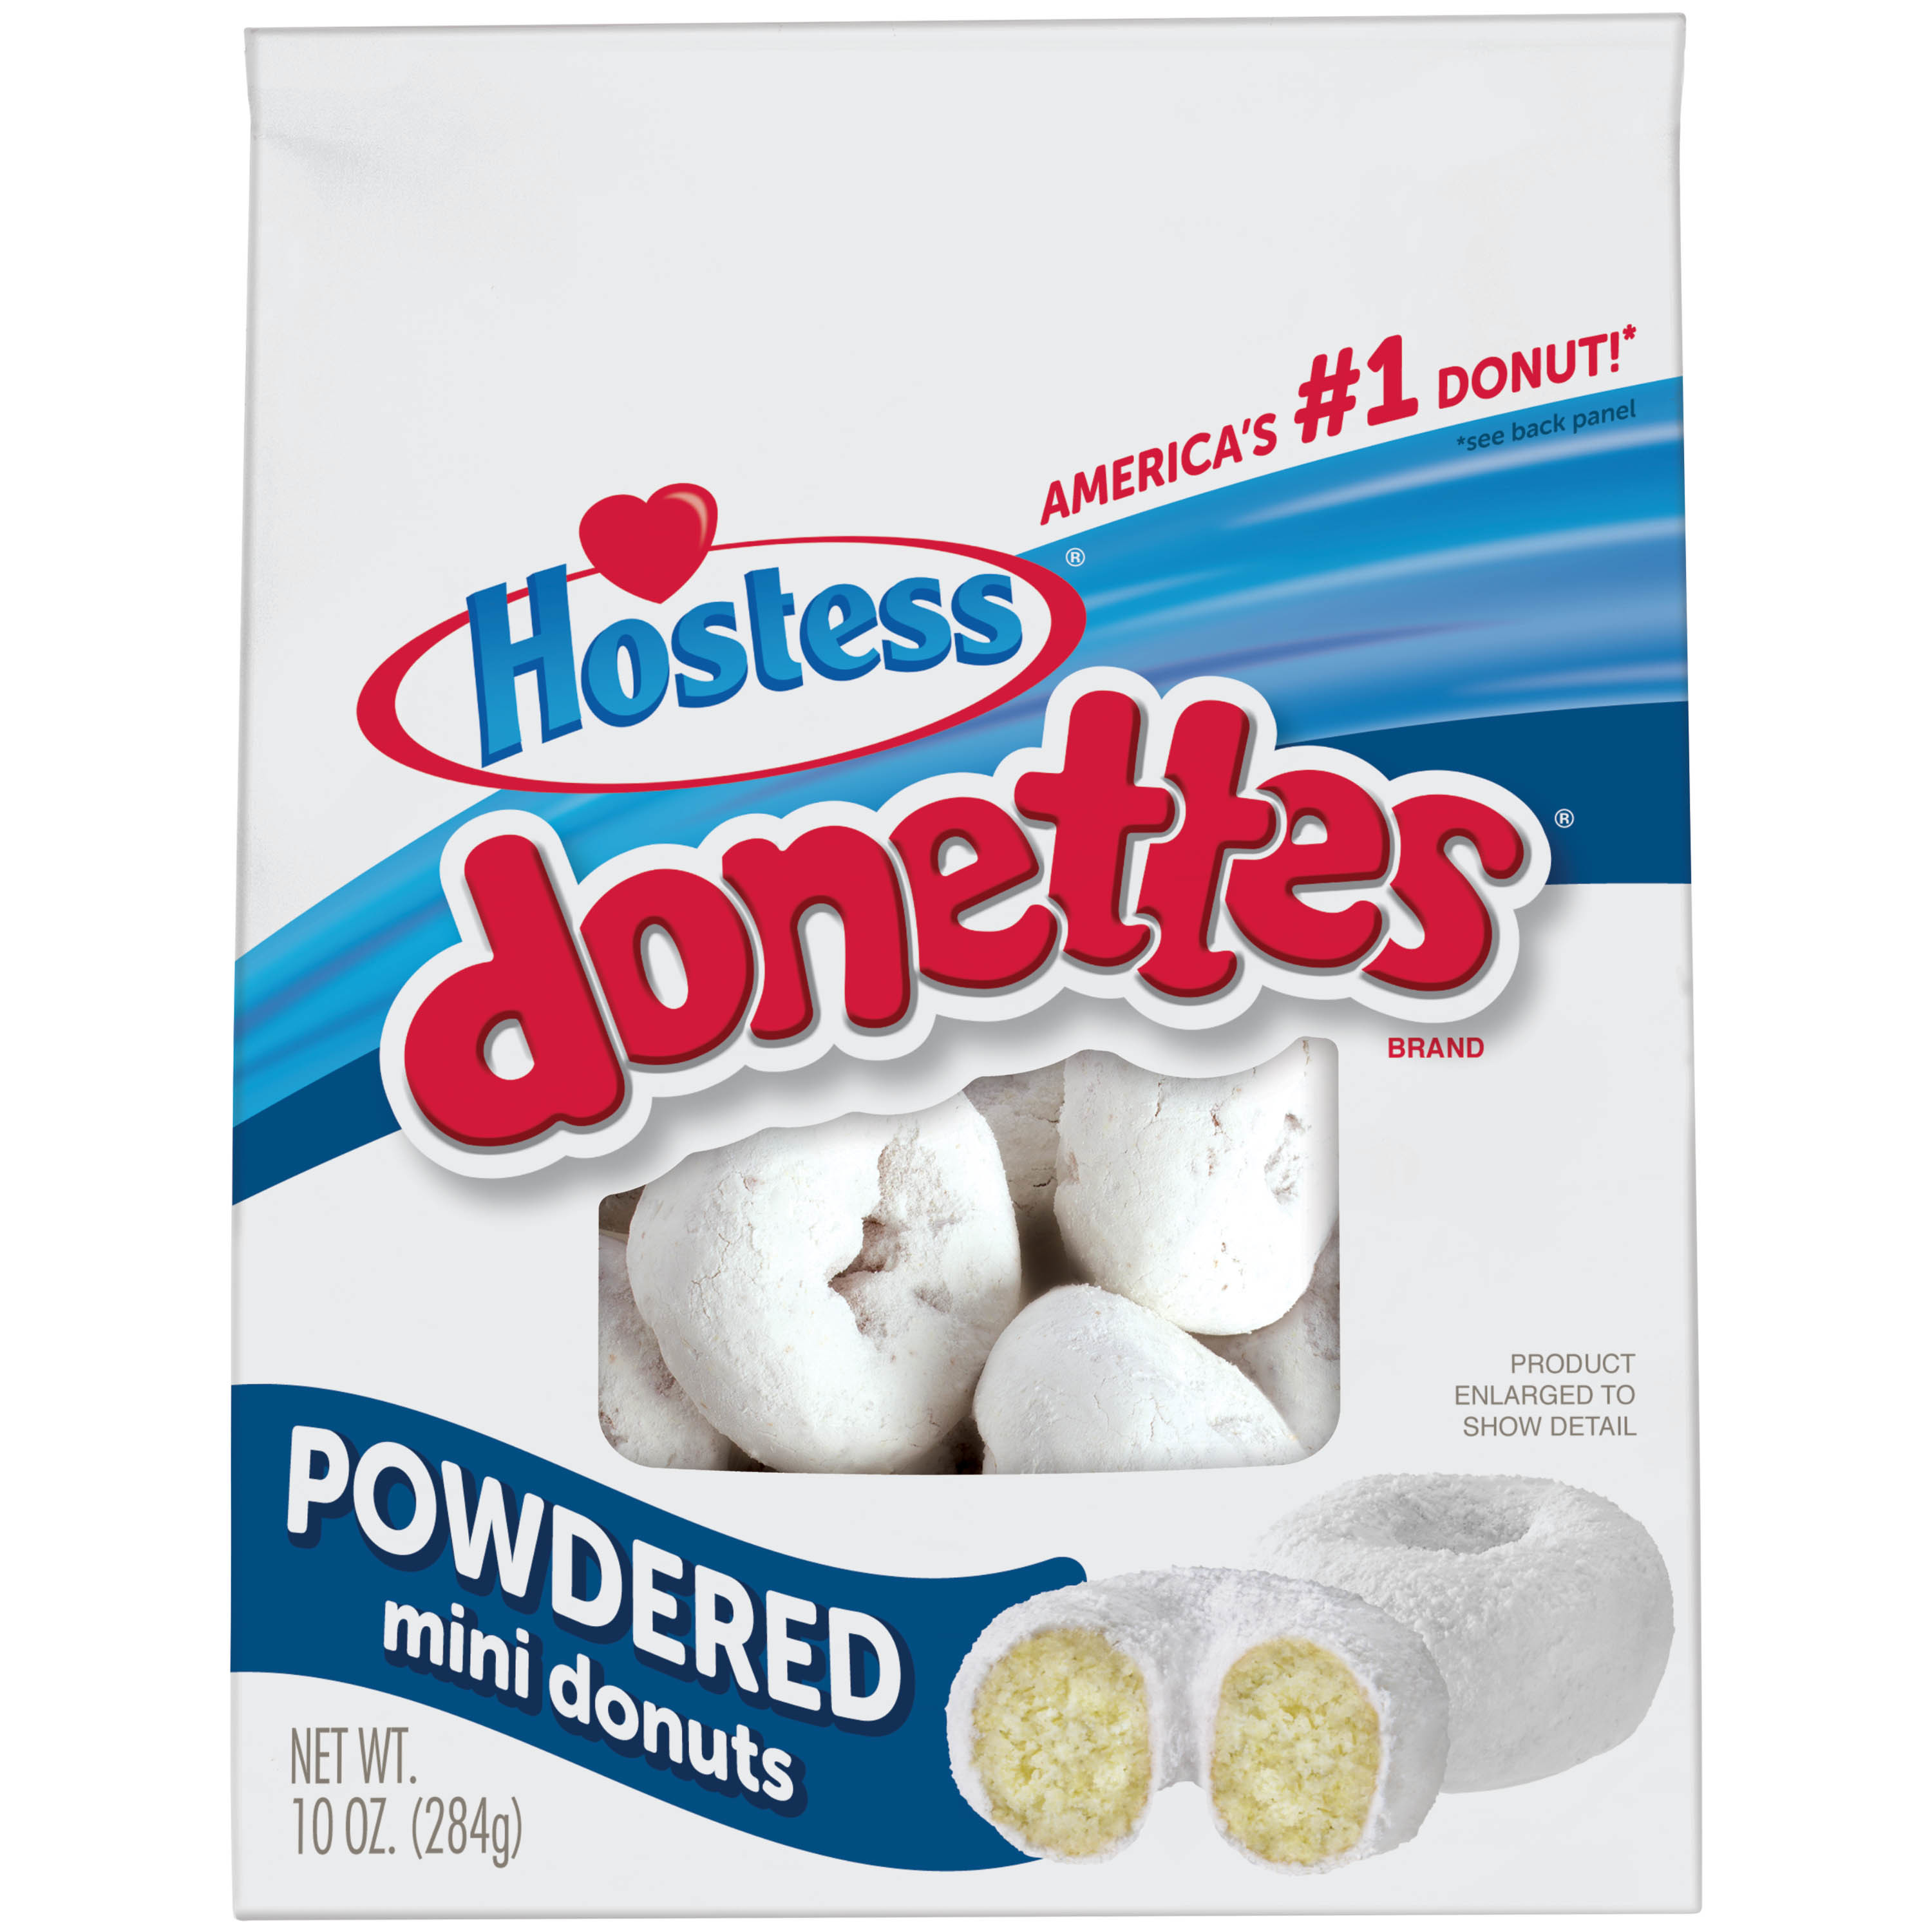 HOSTESS Powdered DONETTES Bag, Powdered Sugar Mini Donuts - 10 oz - image 1 of 16